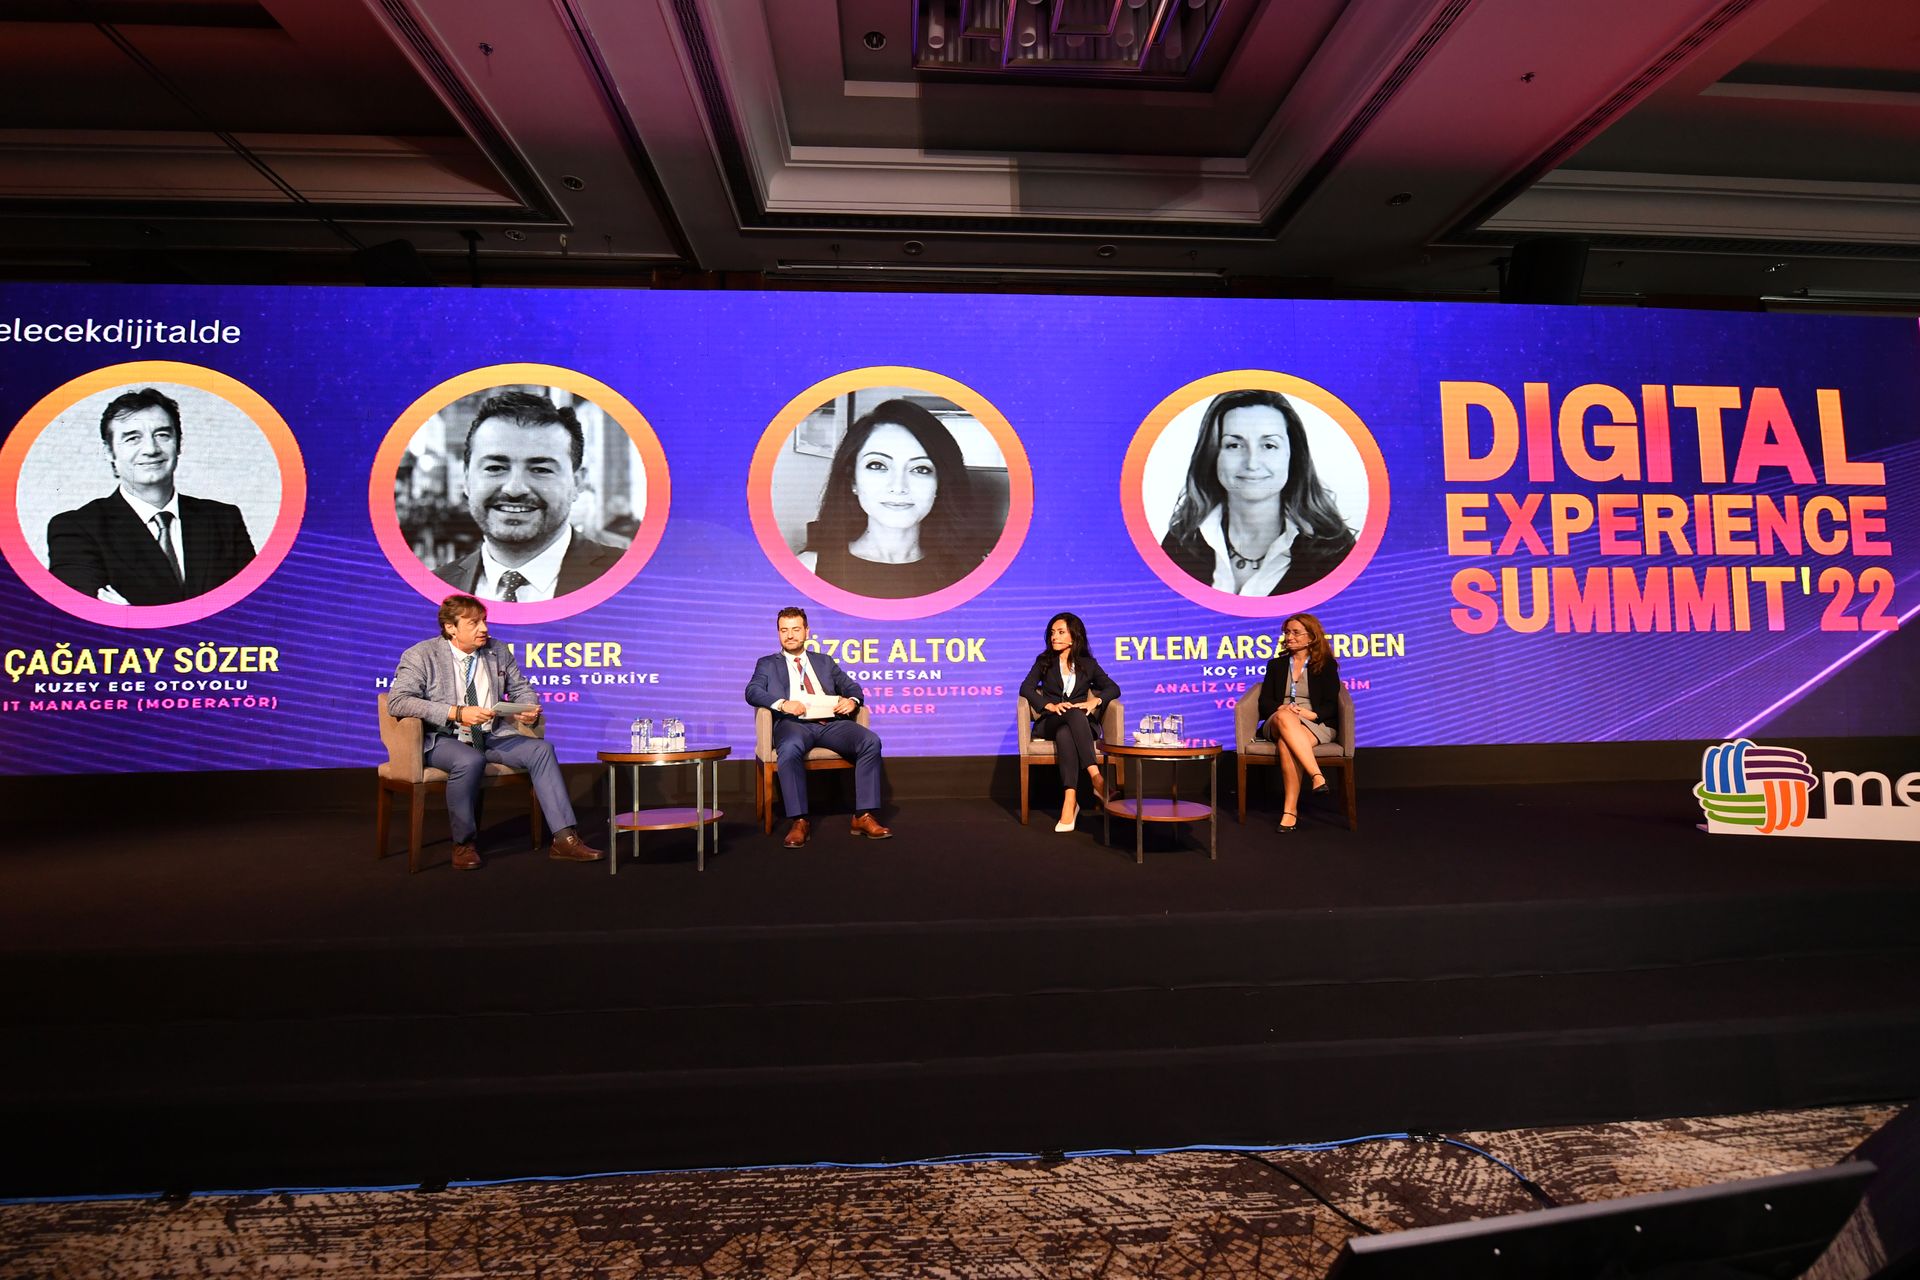 Digital Experience Summit 22 etkinliği nedir?